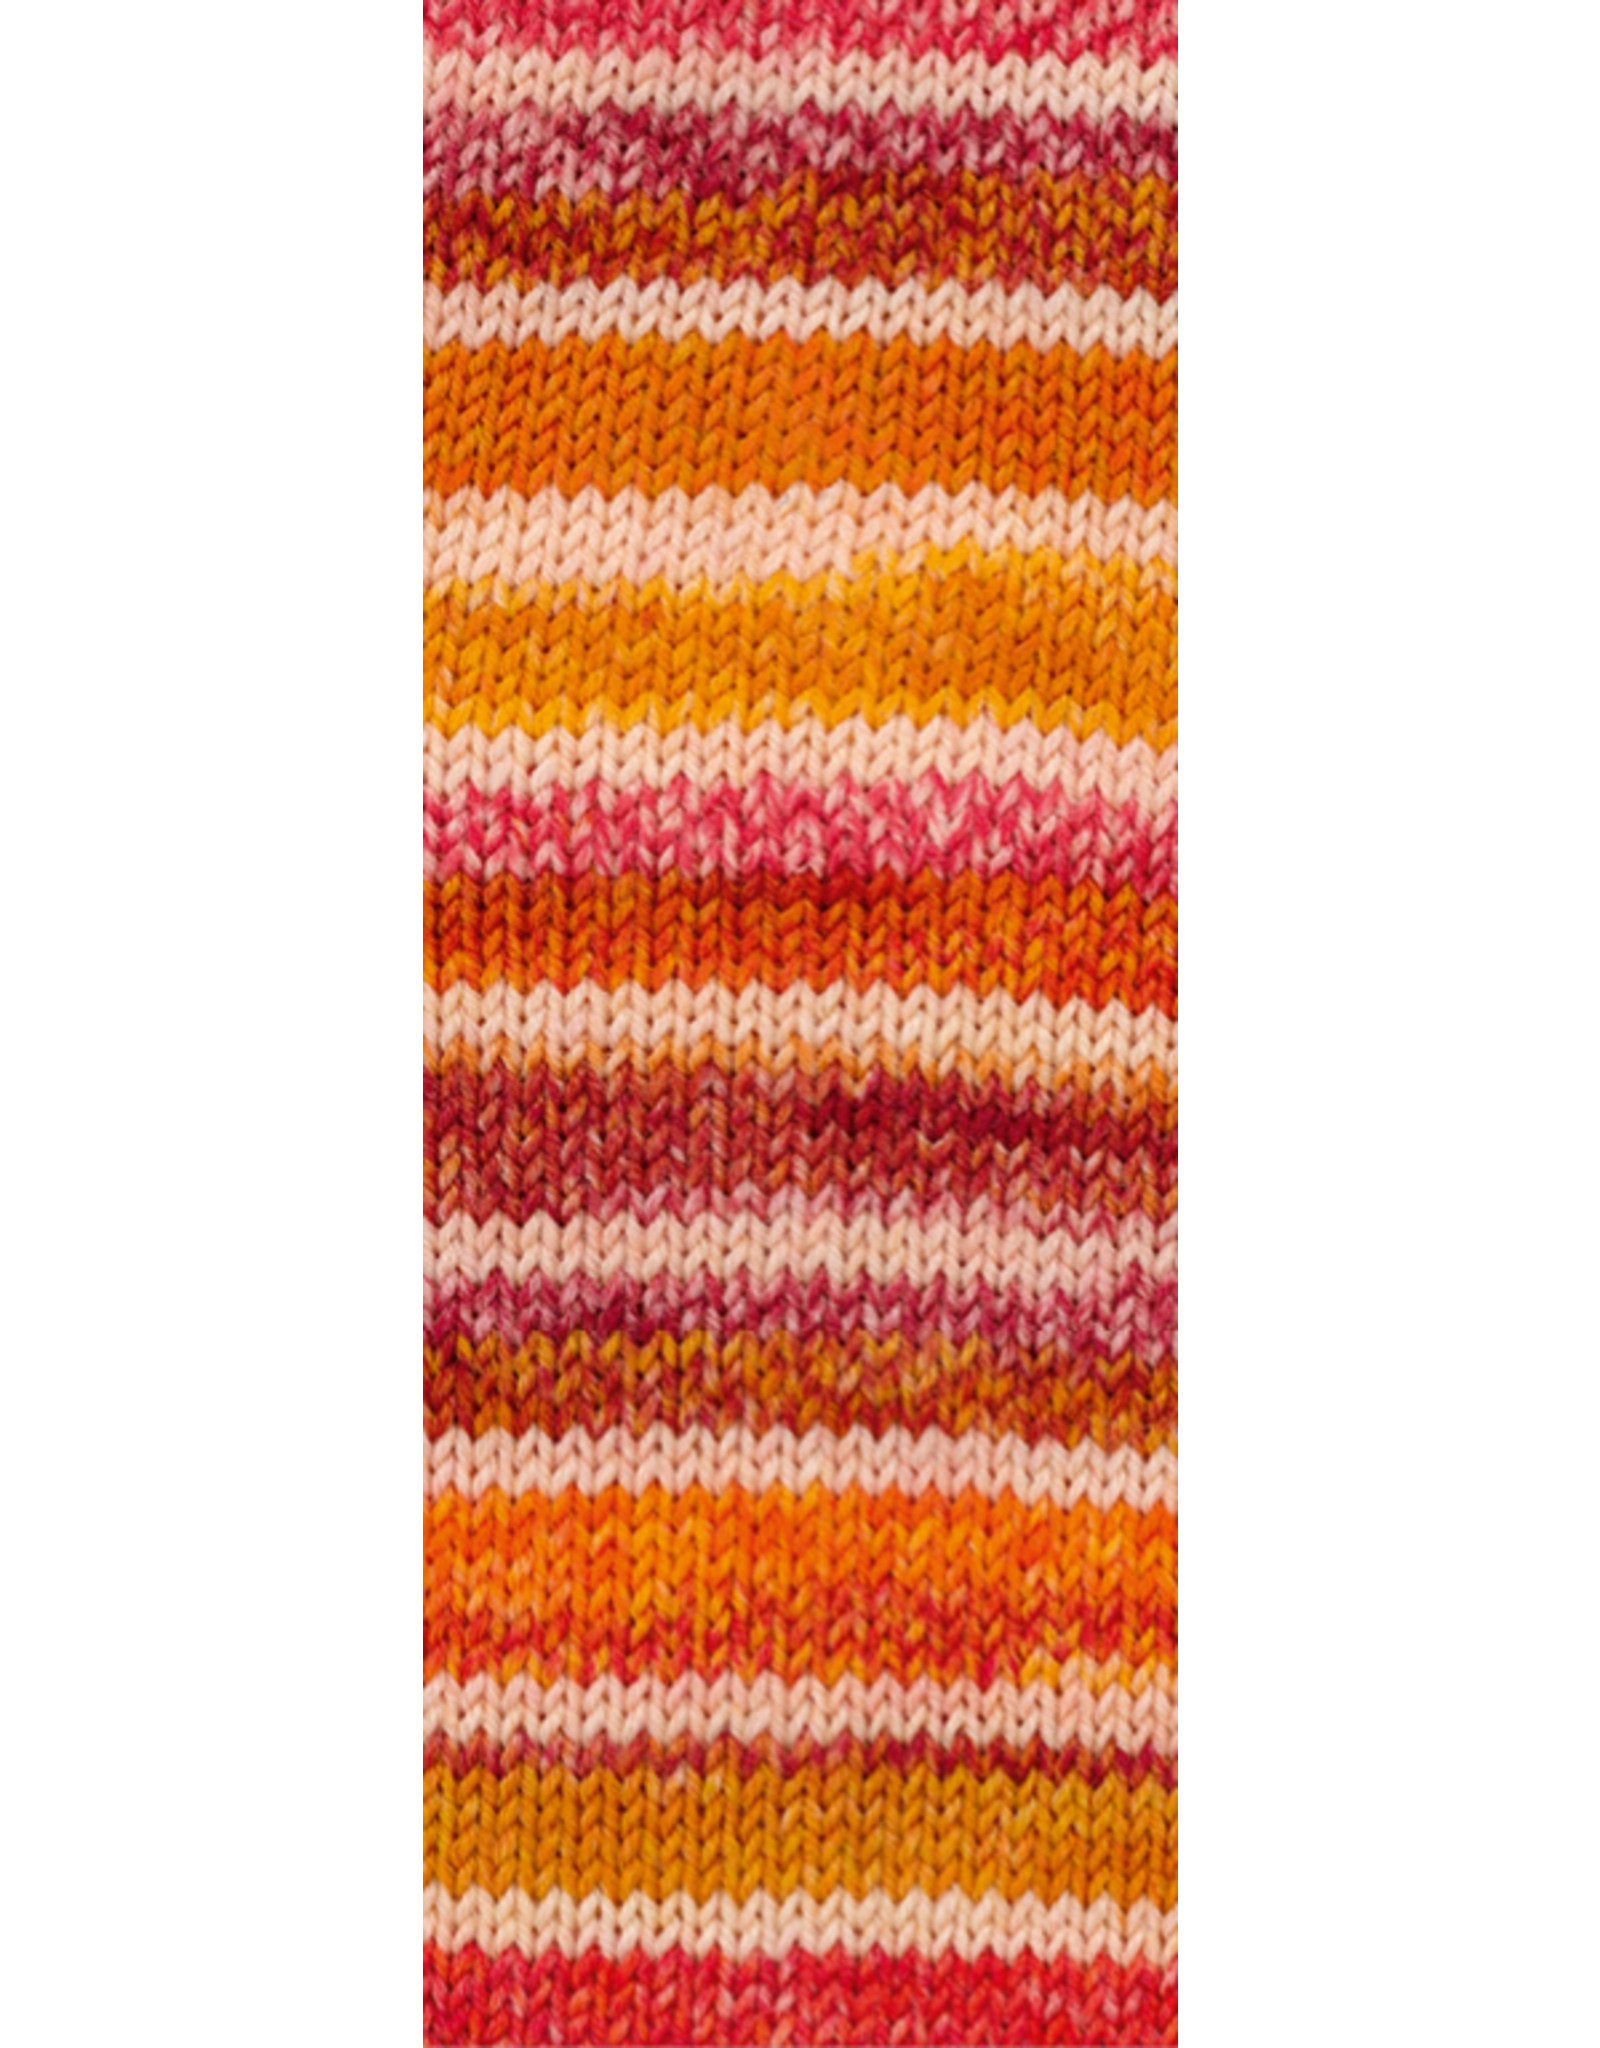 Lana Grossa Lana Grossa Cool wool 4 socks by Tanja Steinbach 7755